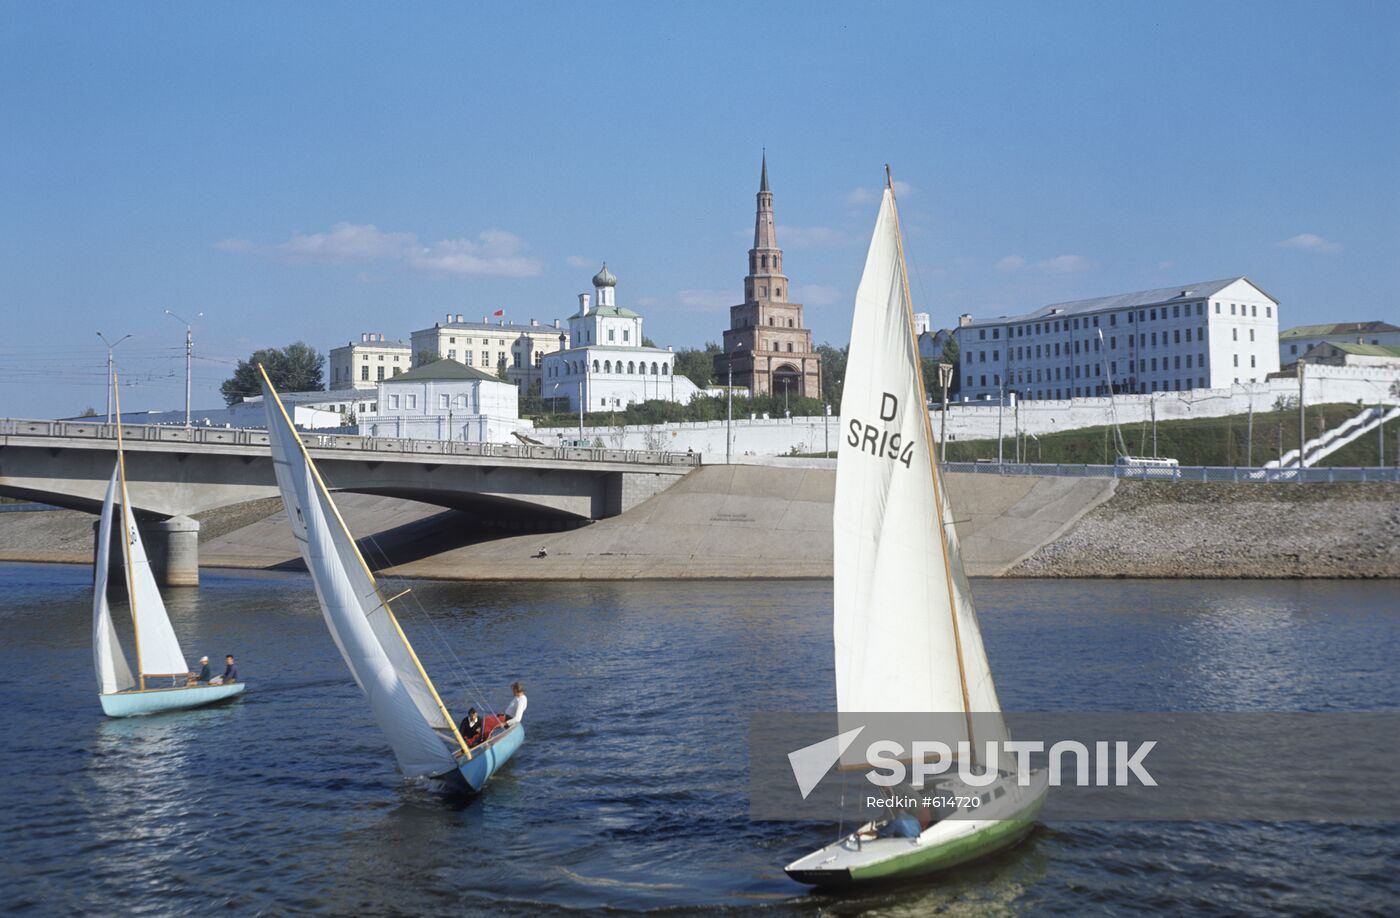 View of Kazan from Volga river